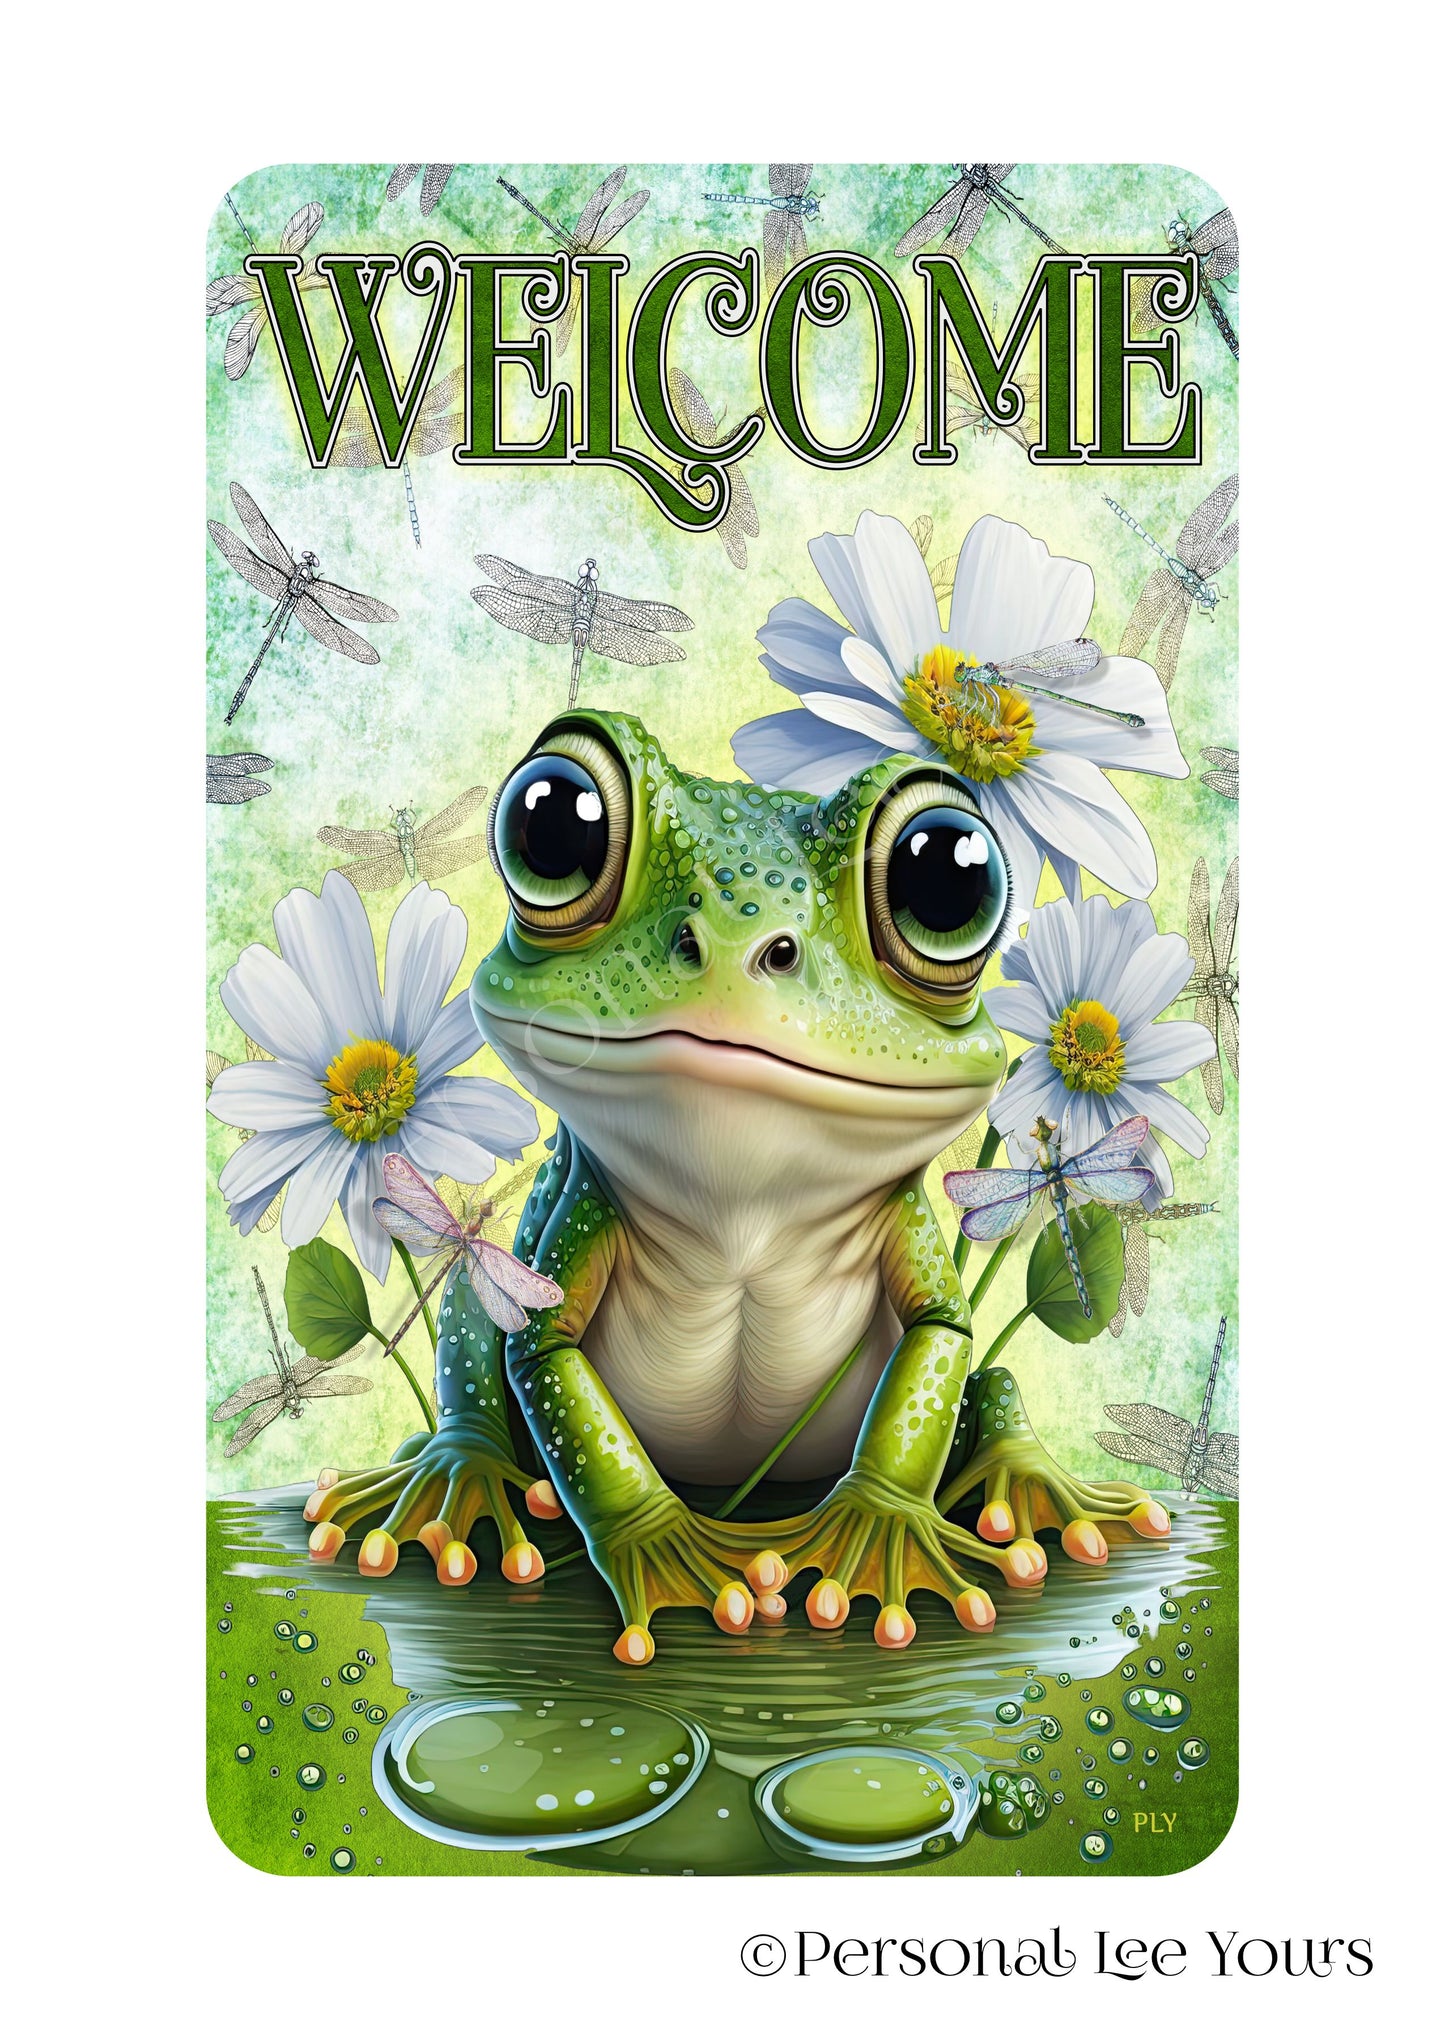 Wreath Sign * Happy Frog Welcome * 4 Sizes * Vertical * Lightweight Metal